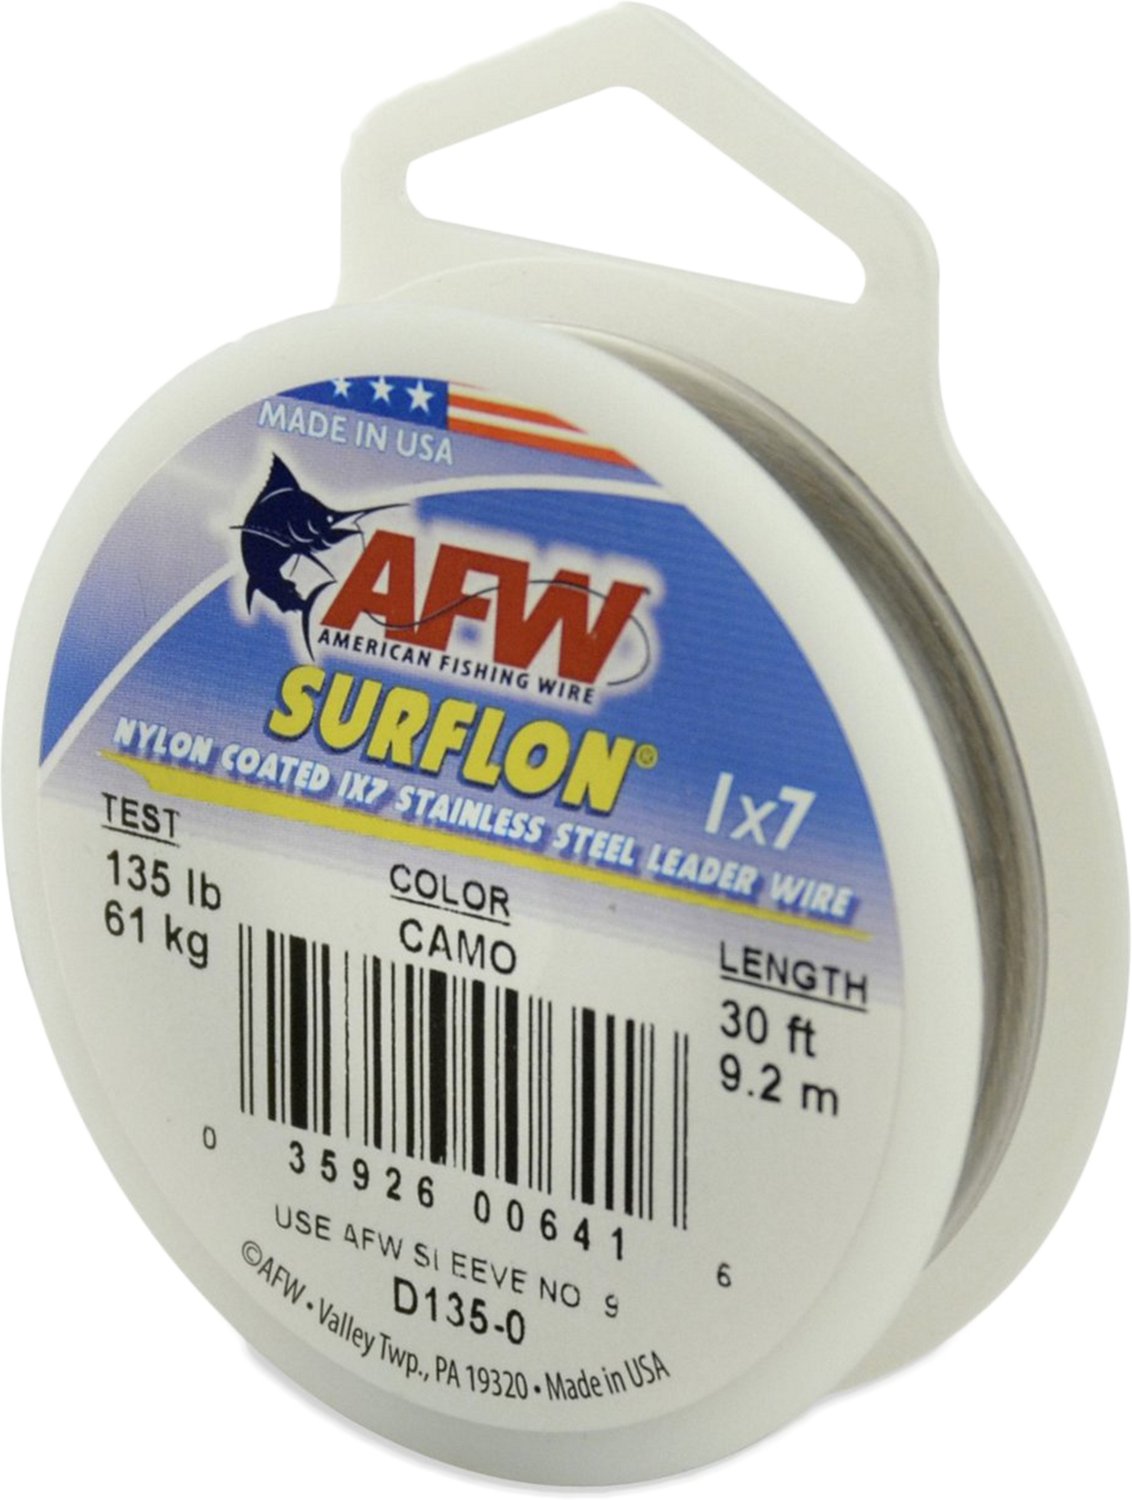 American Fishing Wire Surflon lbs